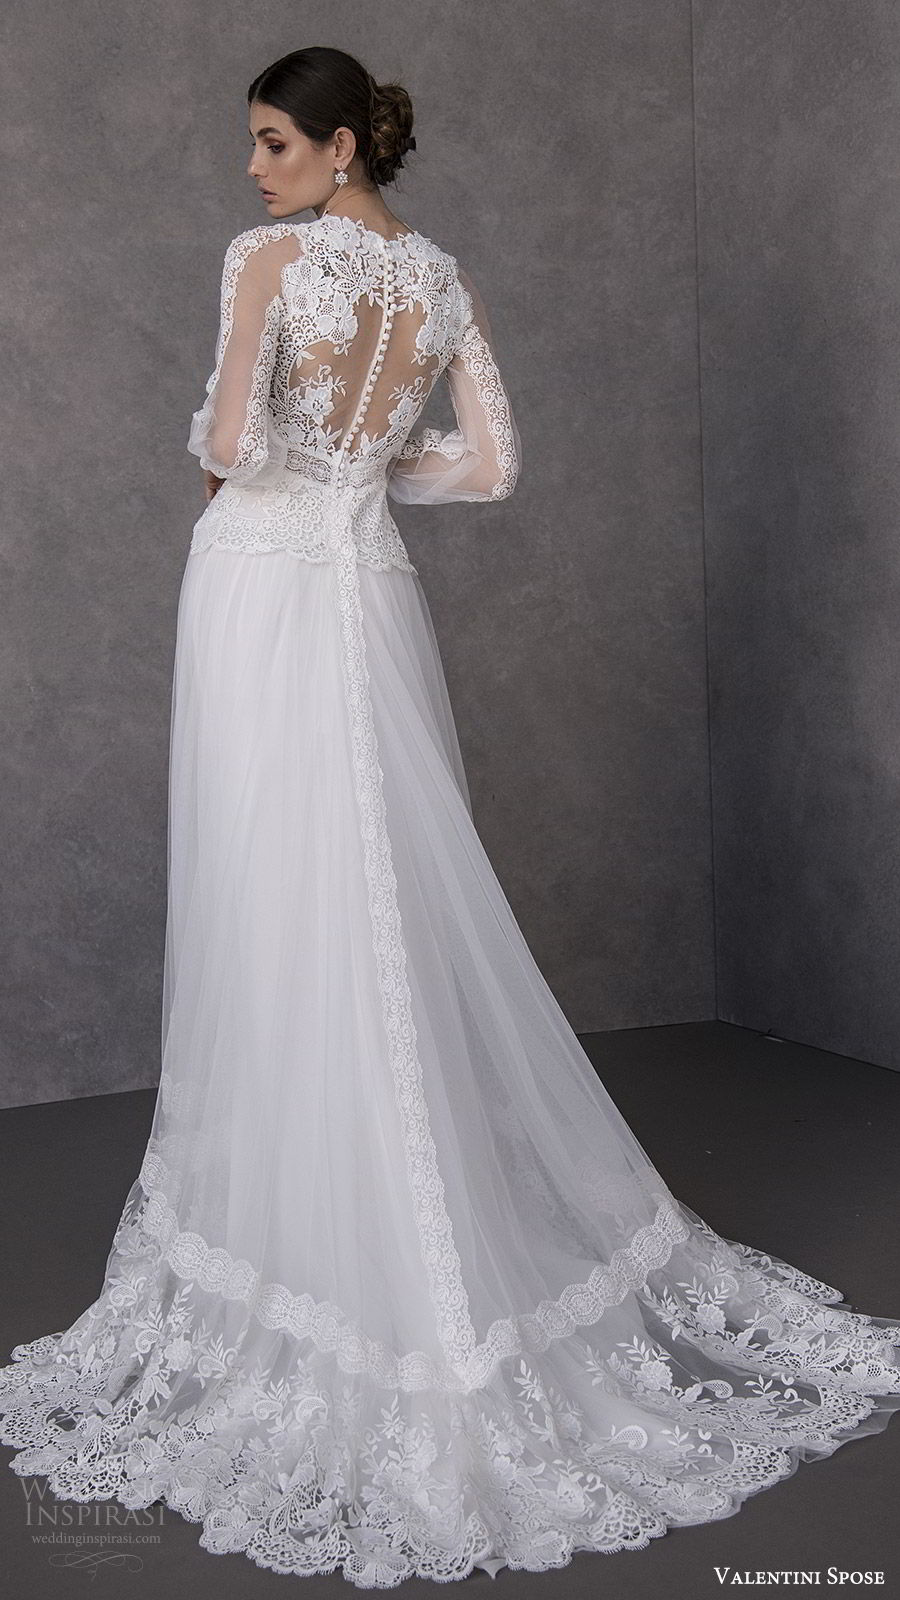 Valentini Spose Spring 2020 Wedding Dresses | Wedding Inspirasi